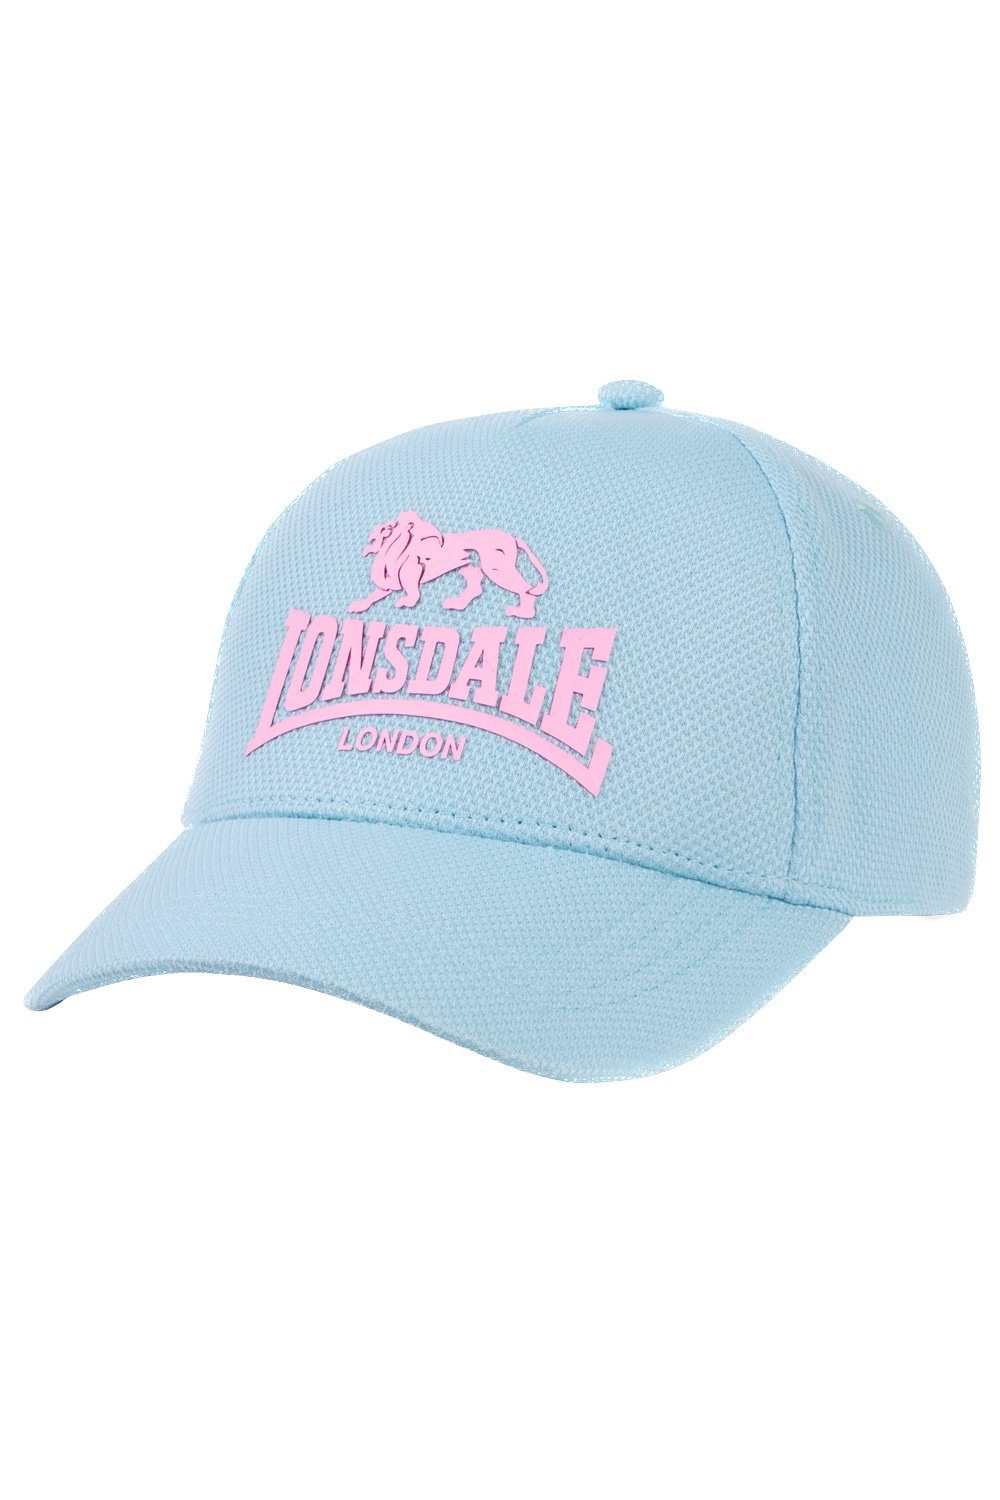 BECKBURY Lonsdale blue/rose Cap Cap Baseball Lonsdale Unisex